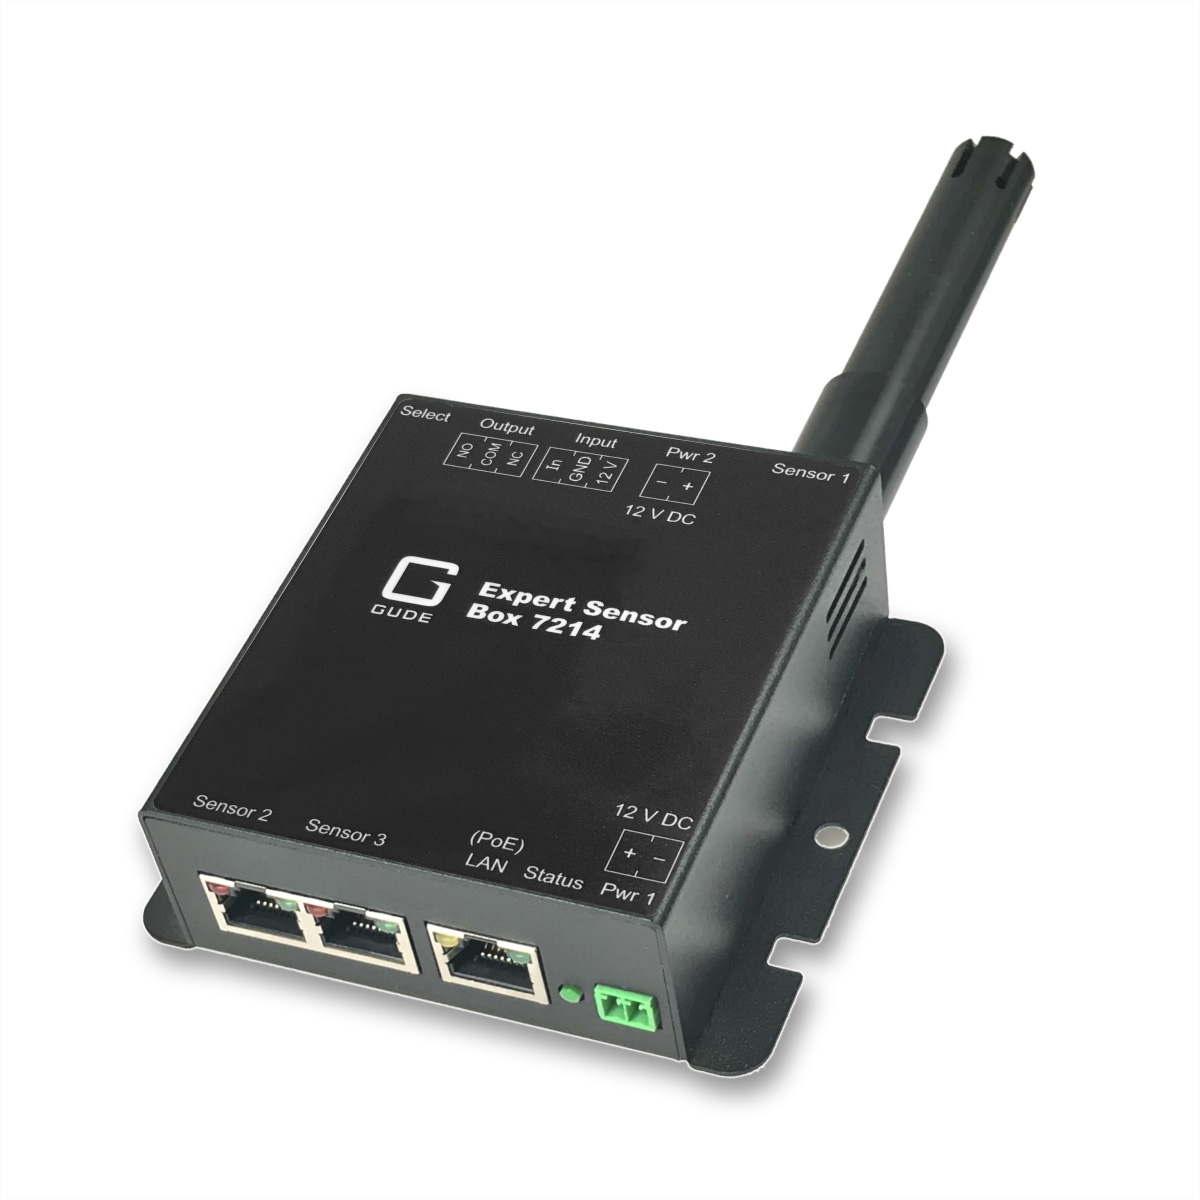 GUDE 721411 Expert LAN-Sensor für Temperatur und I/O-Monitoring, PoE